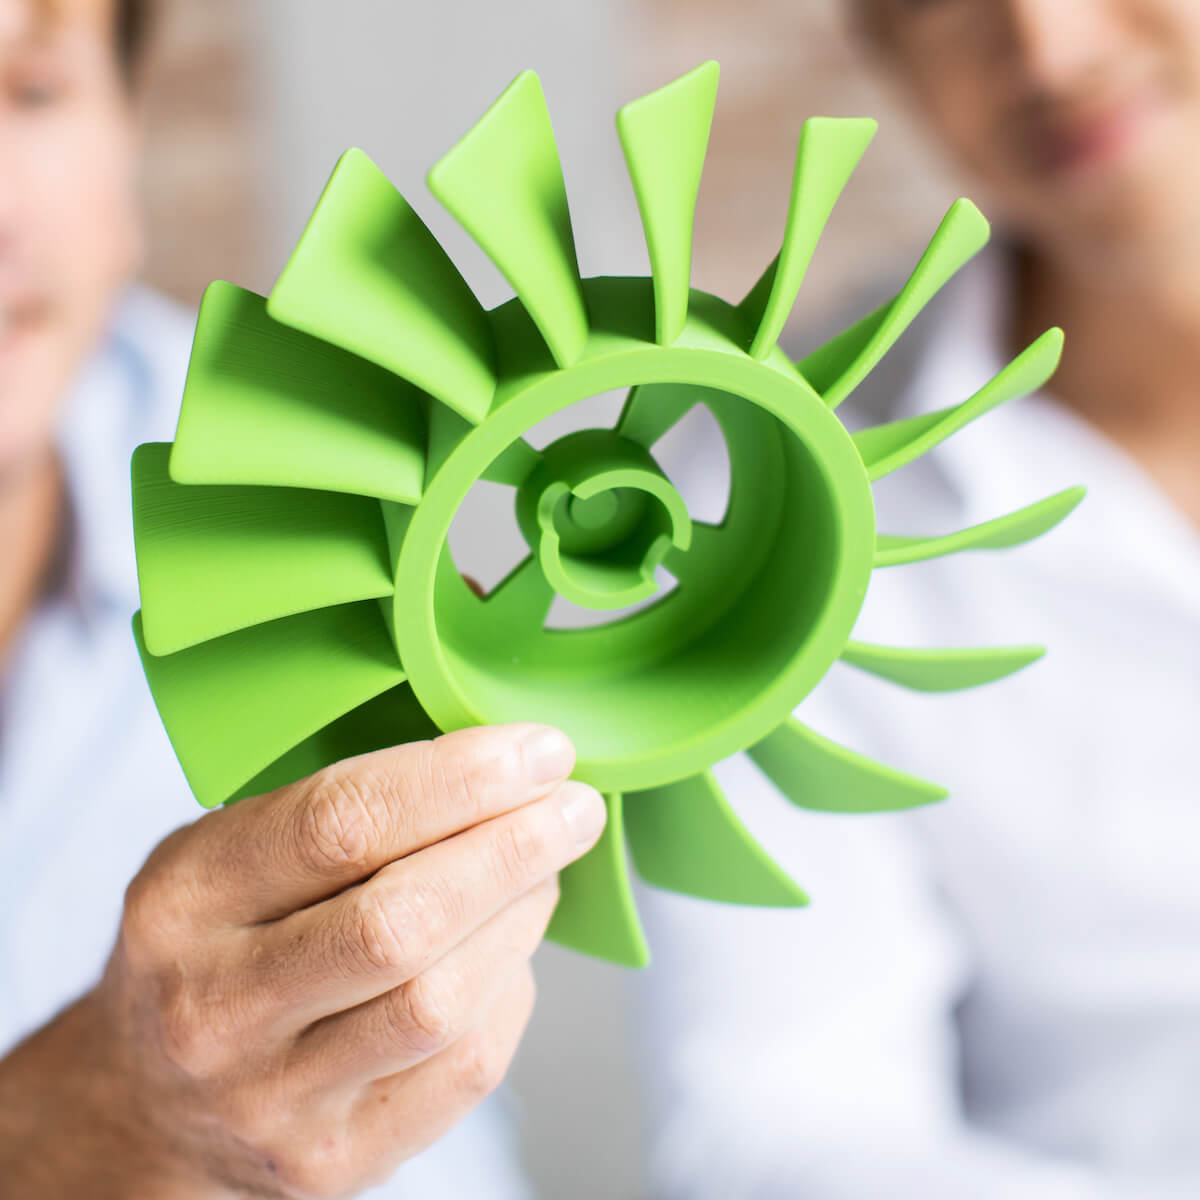 A 3D printed fan design